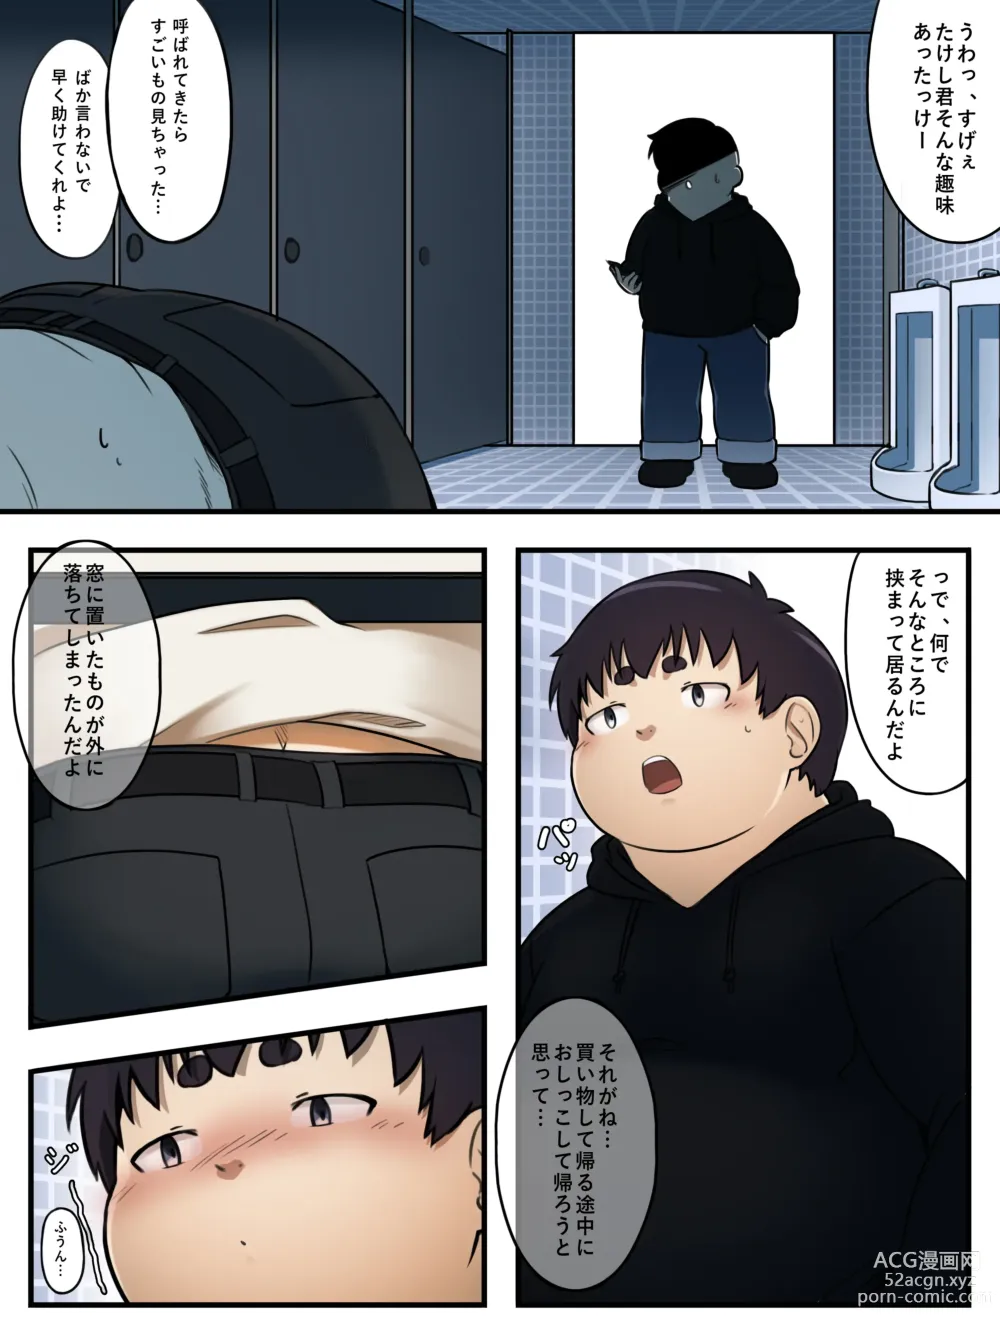 Page 3 of doujinshi Omoide no Present